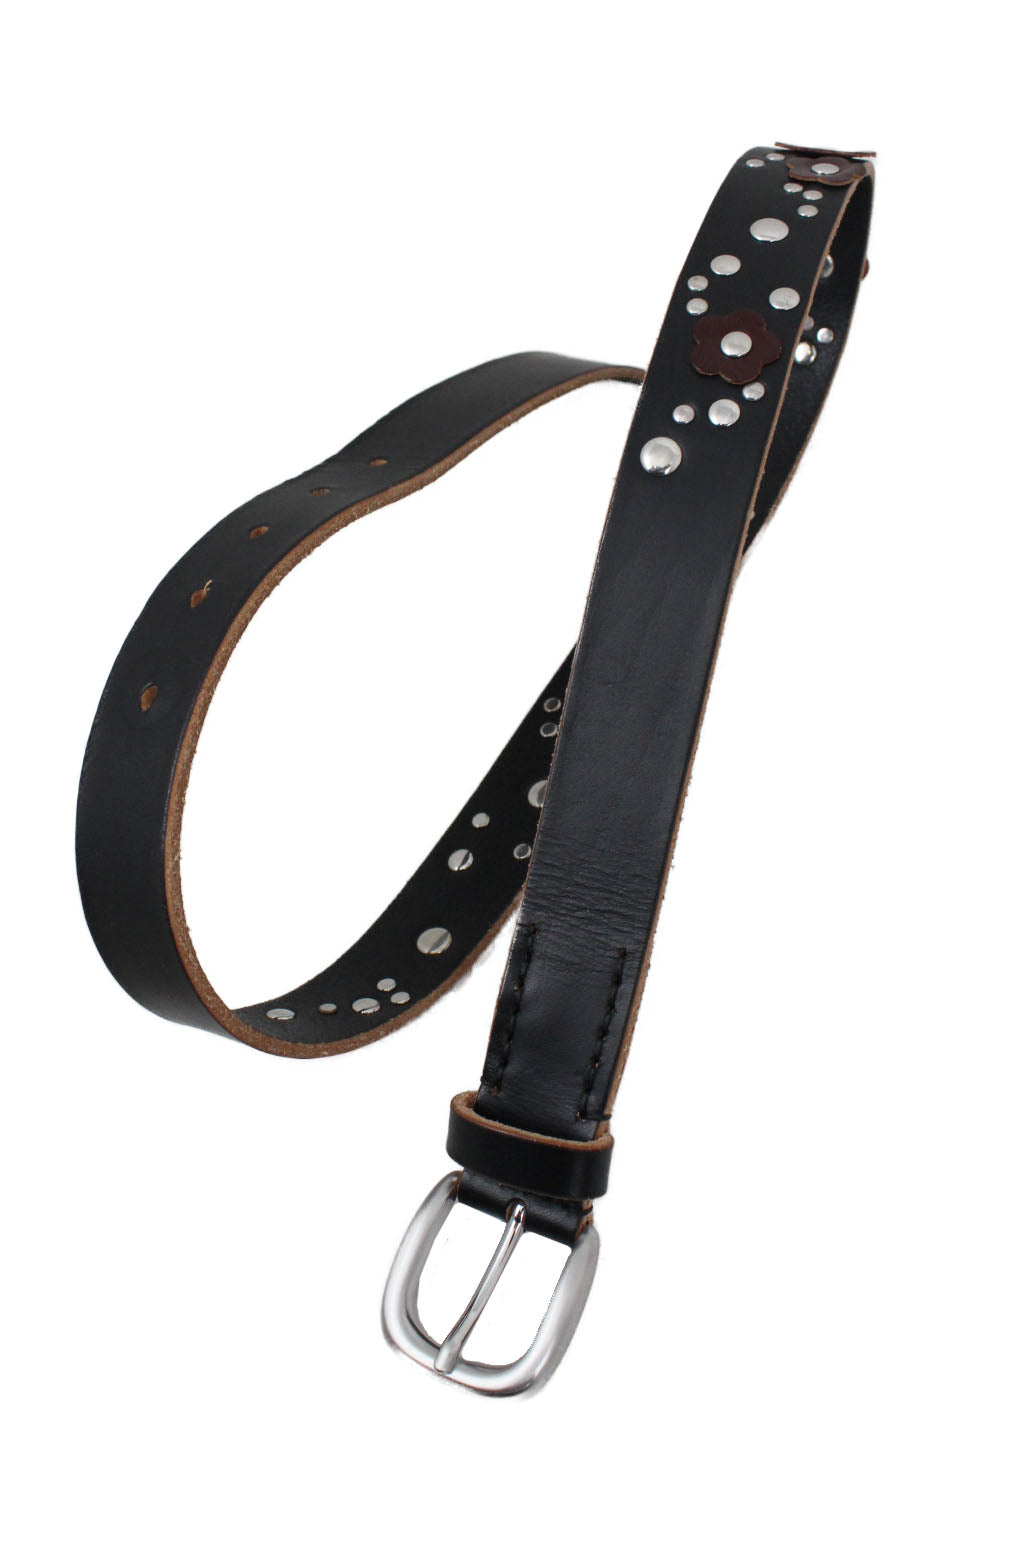 detail photo of studded belt.